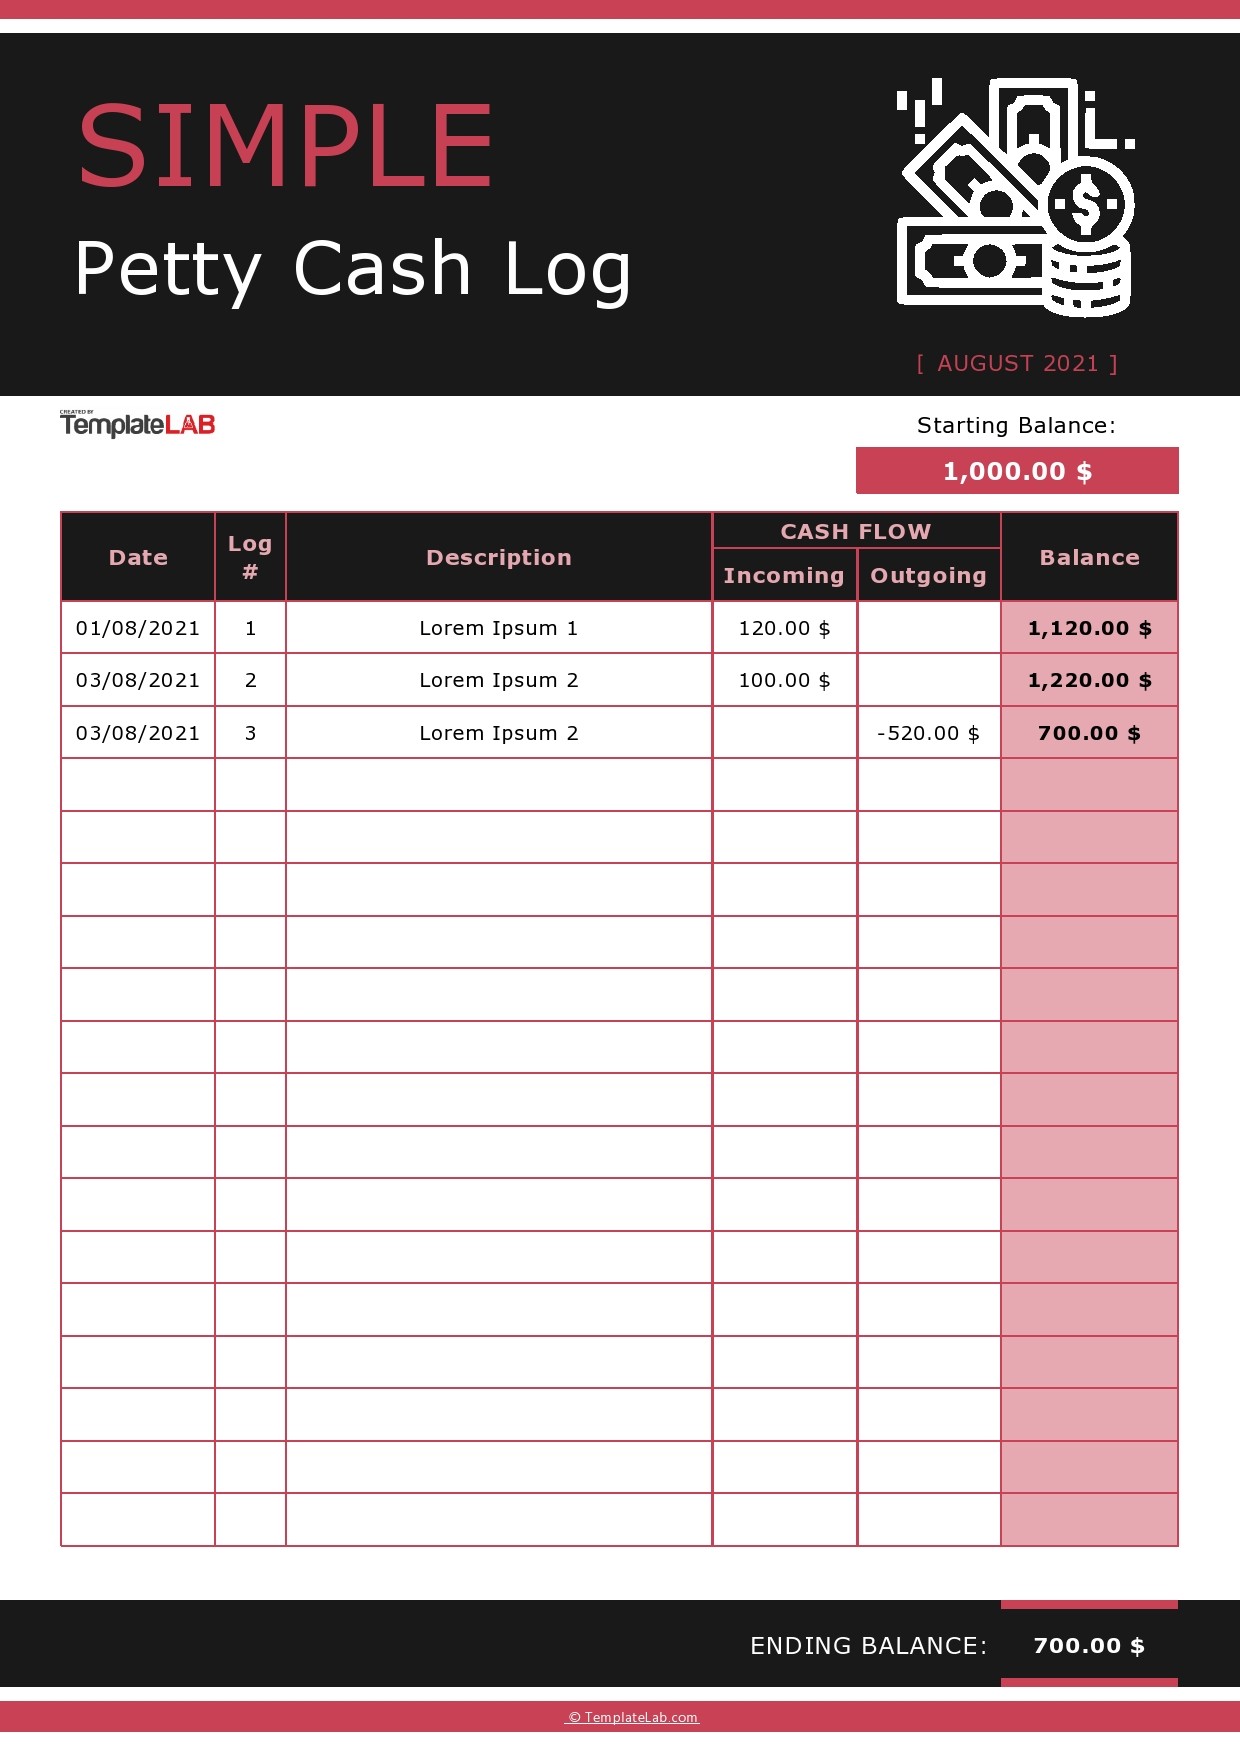 Free Simple Petty Cash Log Template - TemplateLab.com